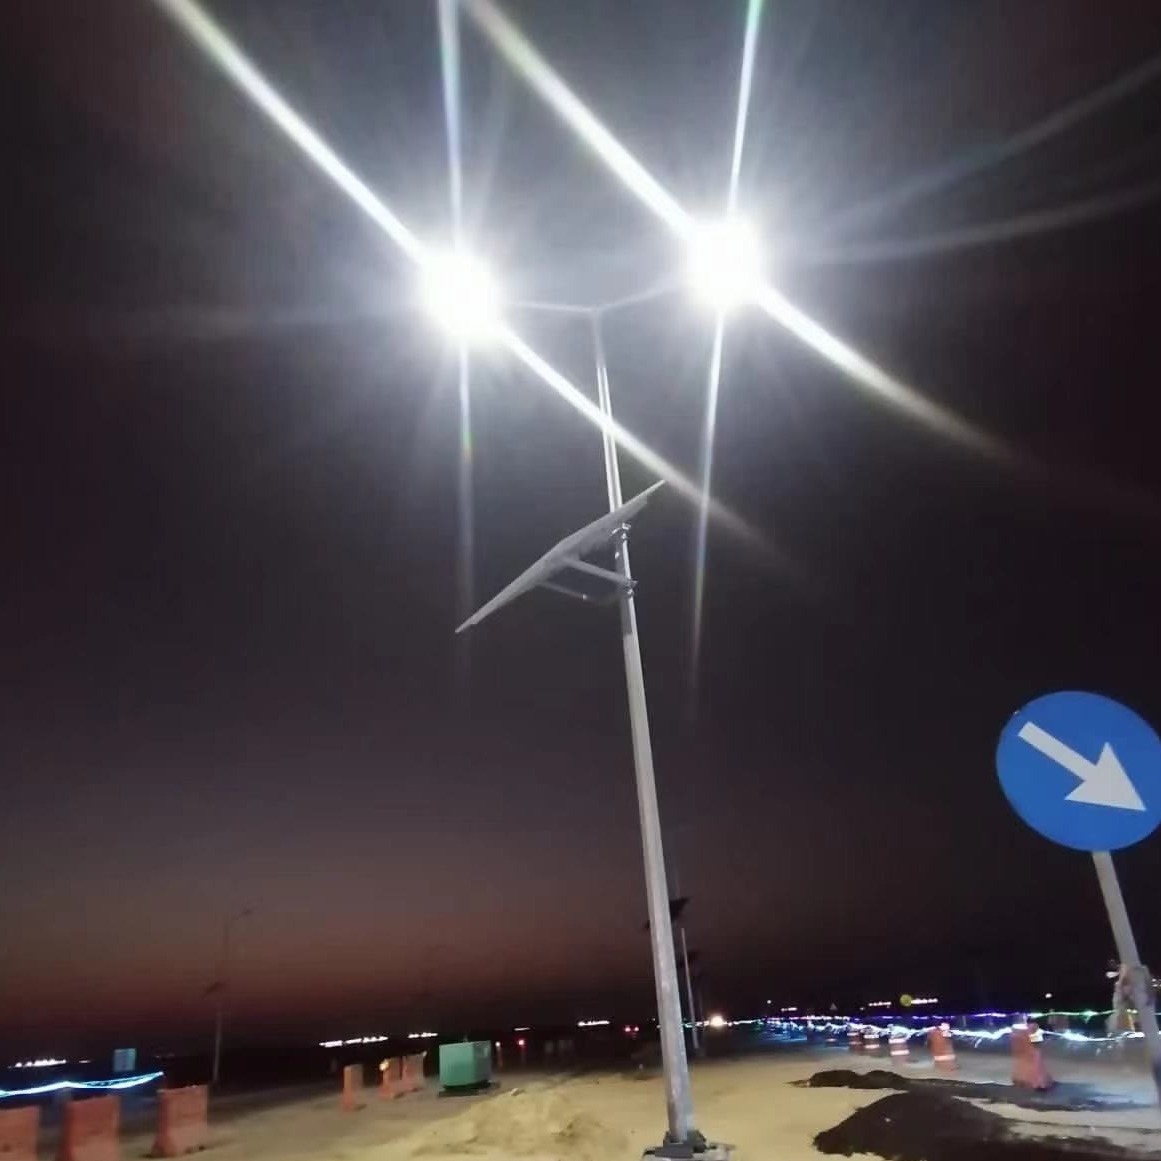 2000pcs 200W Hi-Slim Street Light in MIP-upgrade-Tanajib-Roads-Saudi-Aramco